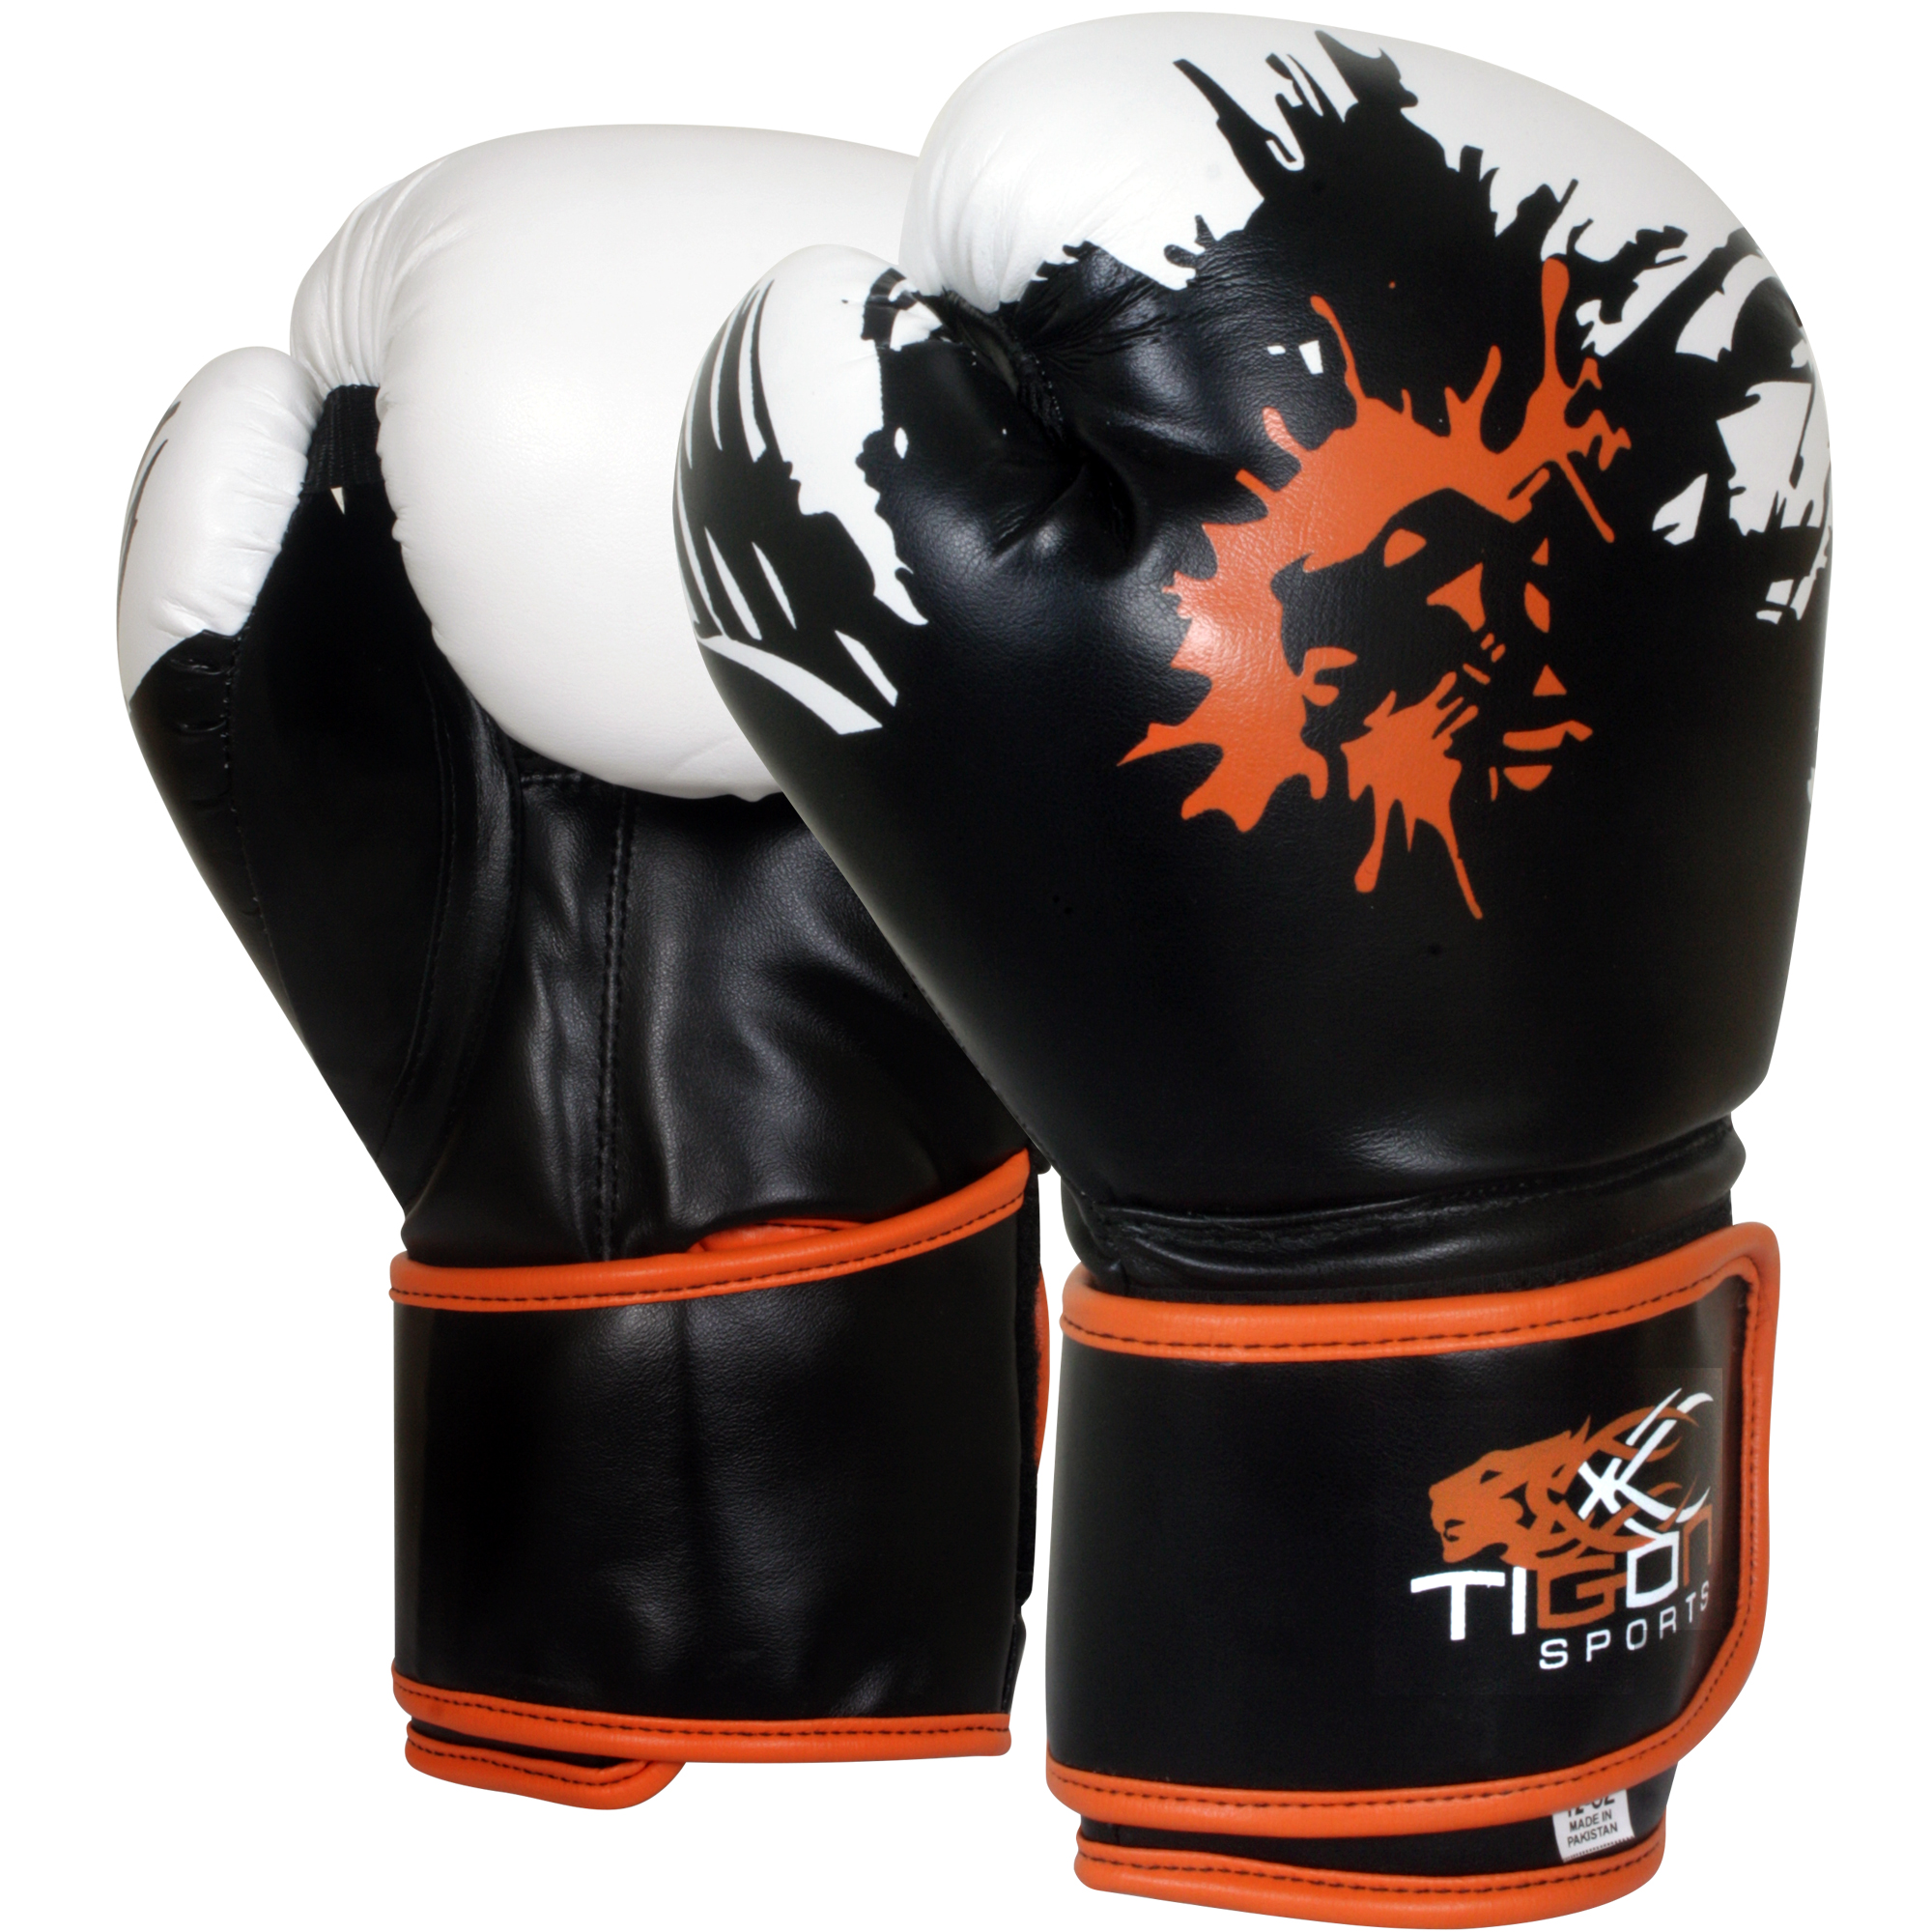 Tigon Sports Classic Boxing | UK & Worldwide